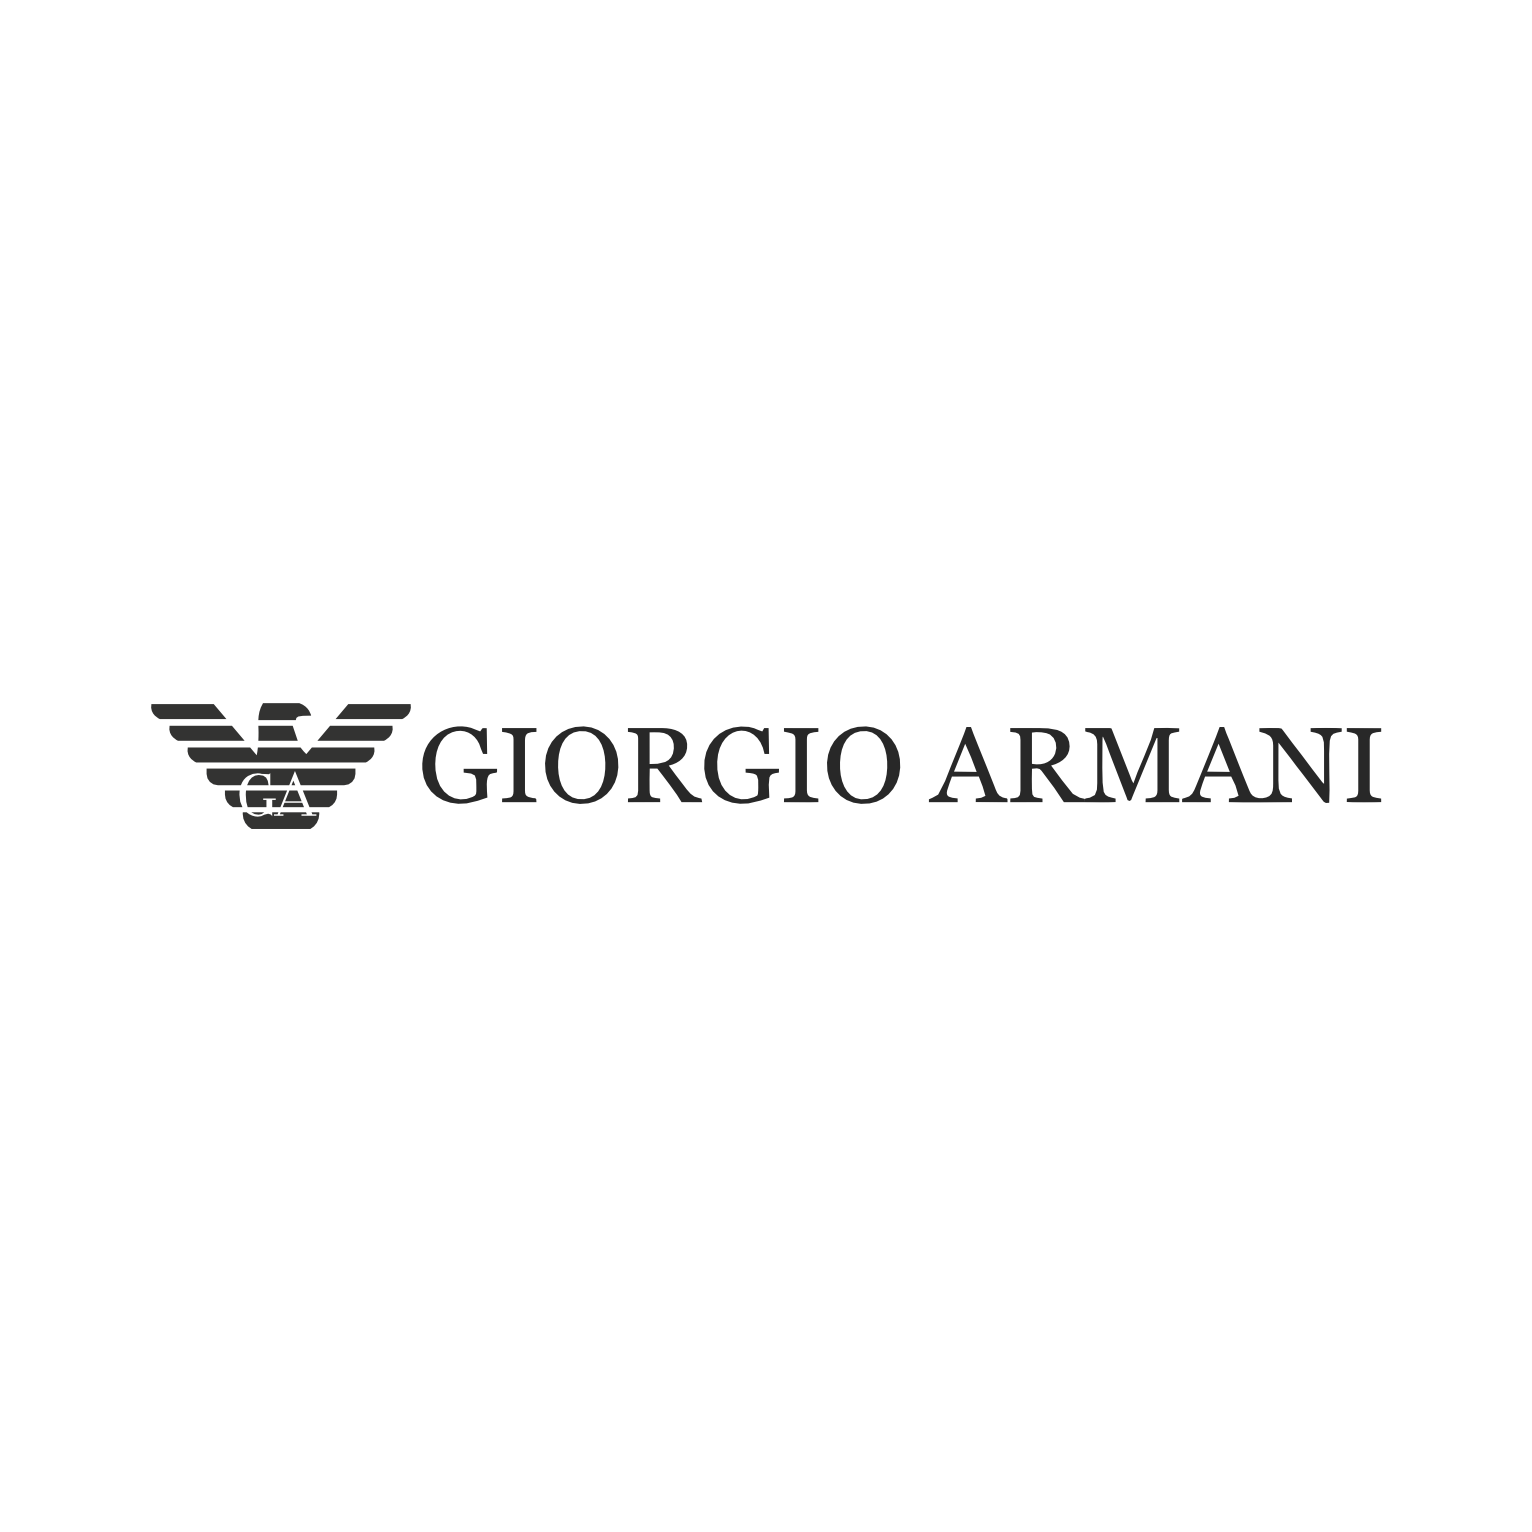 Klem houd er rekening mee dat onbetaald Download Giorgio Armani Logo PNG and Vector (PDF, SVG, Ai, EPS) Free